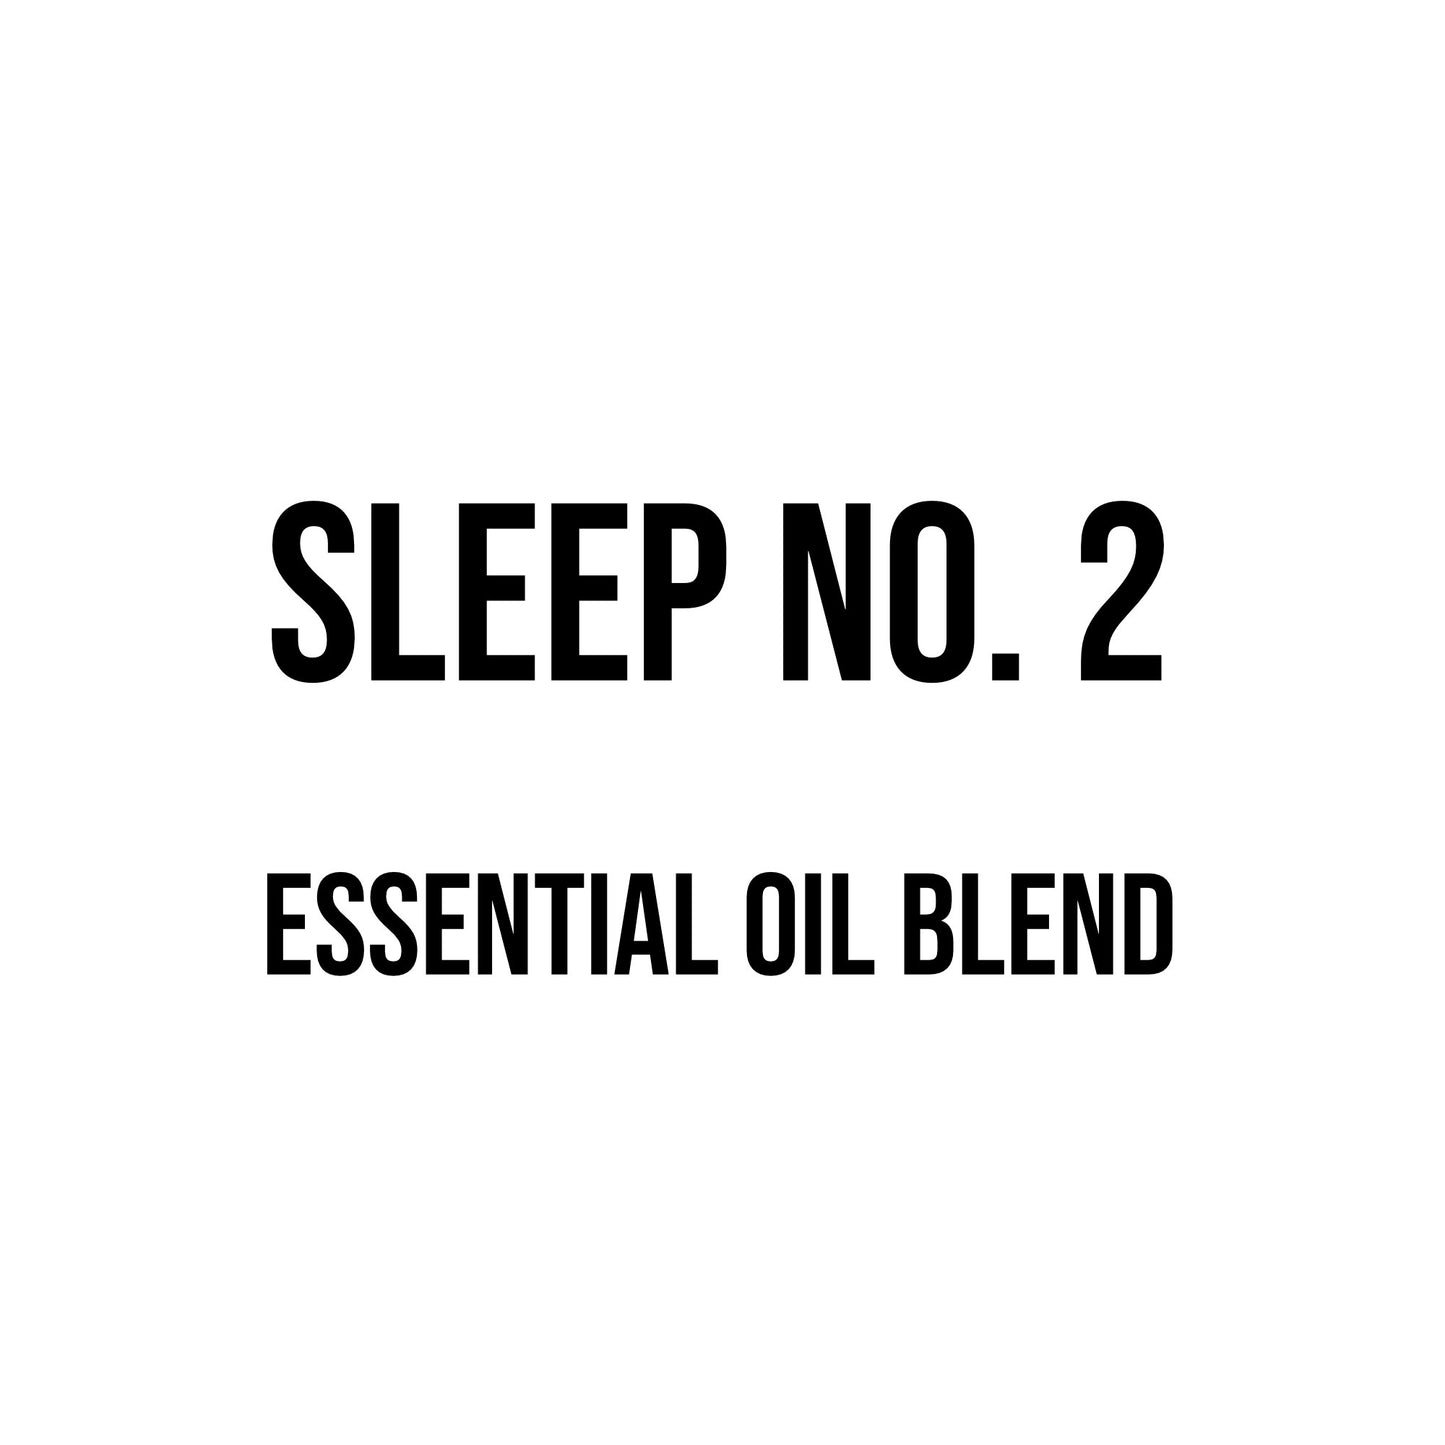 Sleep No. 2 Essential Oil Blend